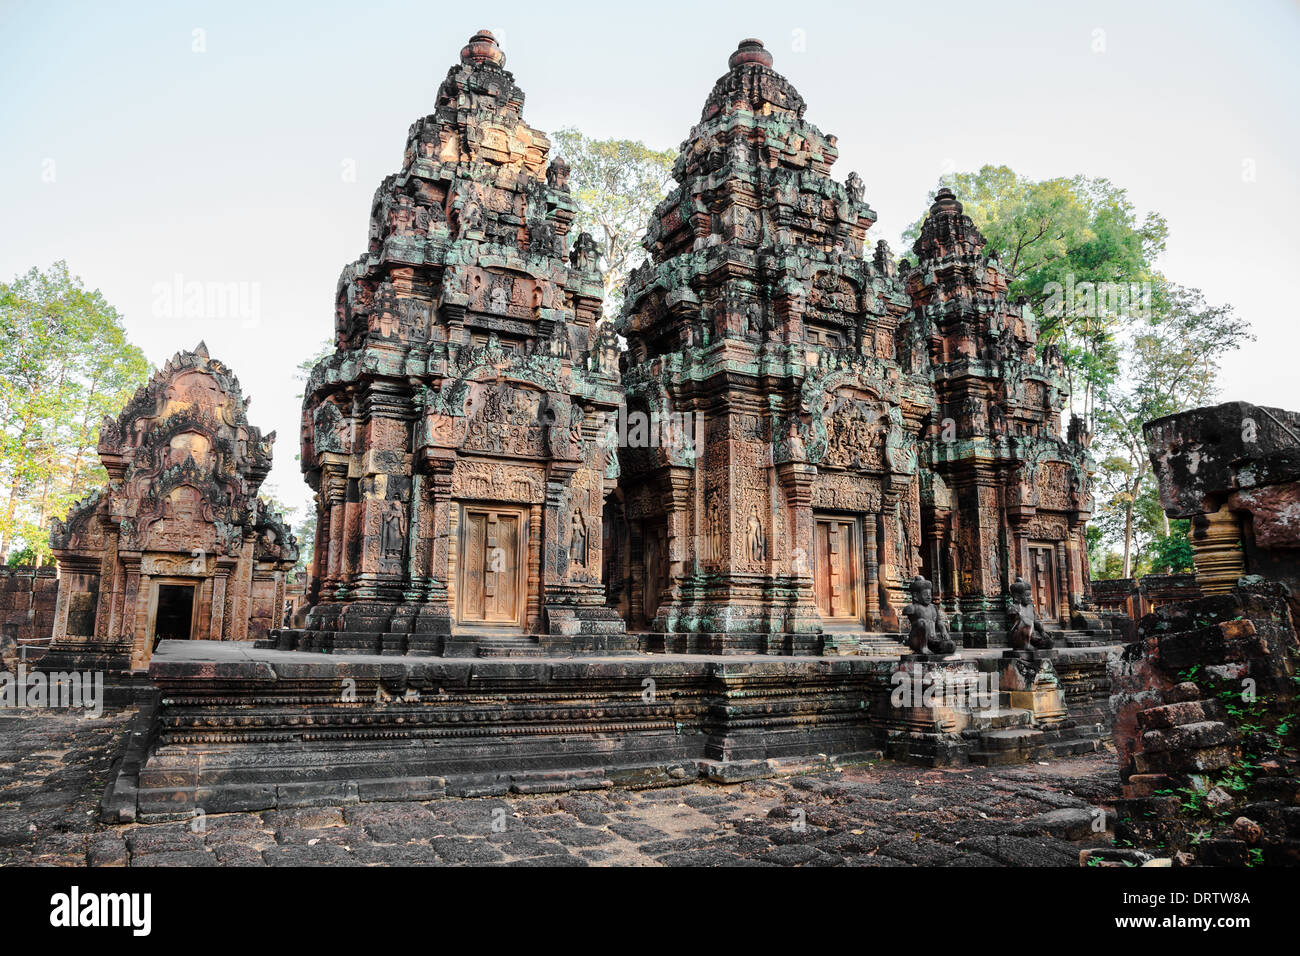 Banteay srey temple in siem reap, cambodi Stock Photo